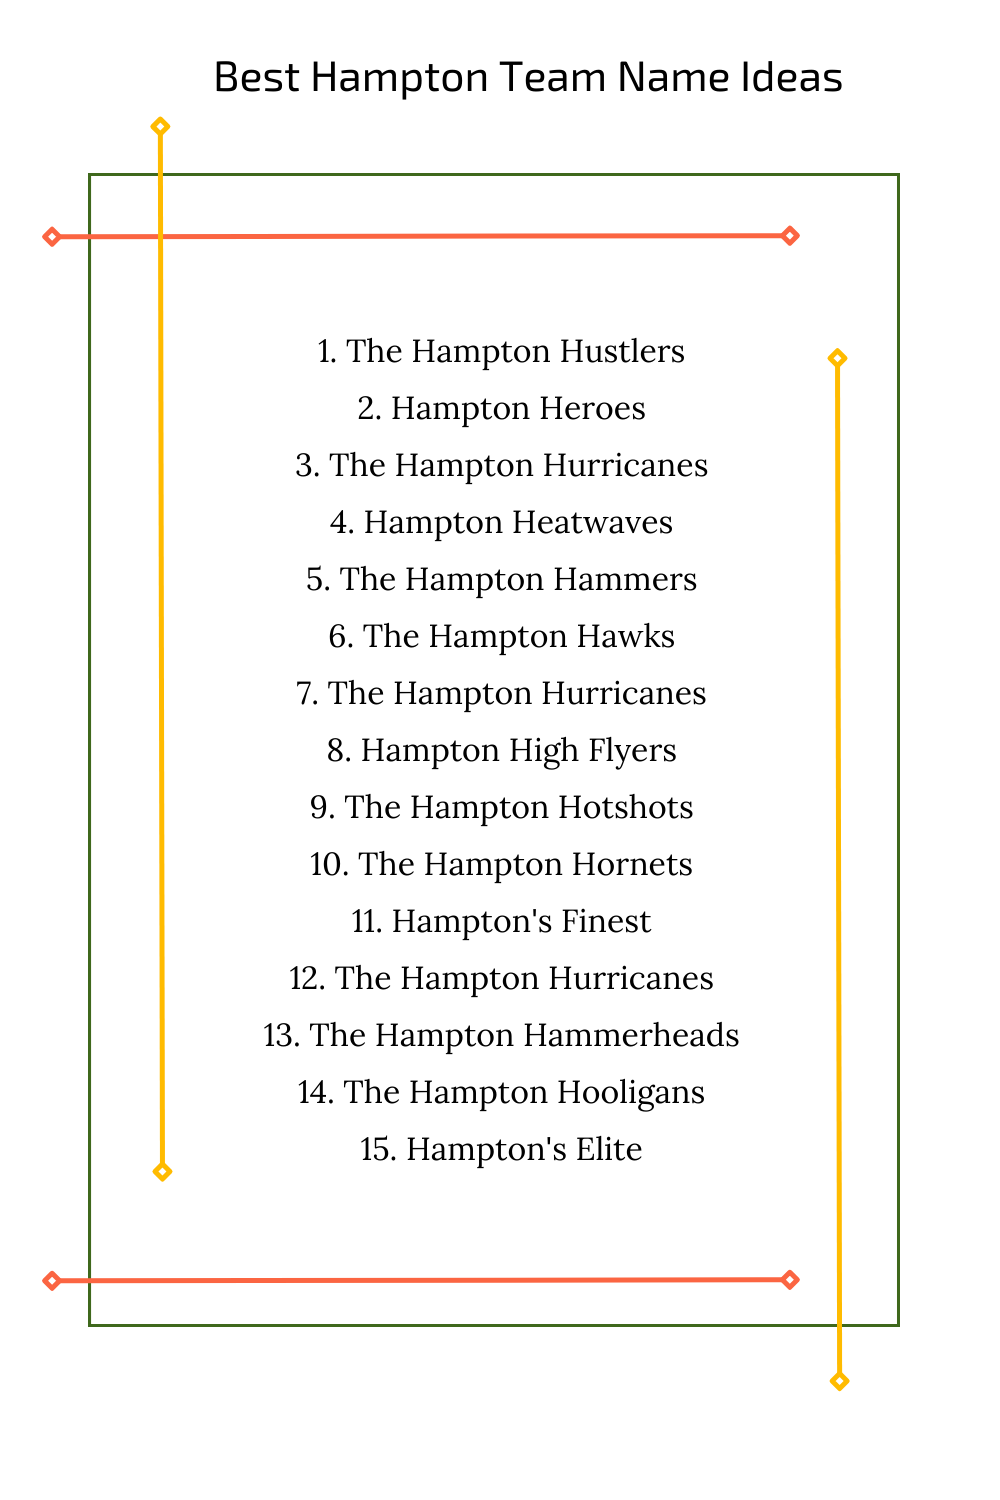 Best Hampton Team Name Ideas